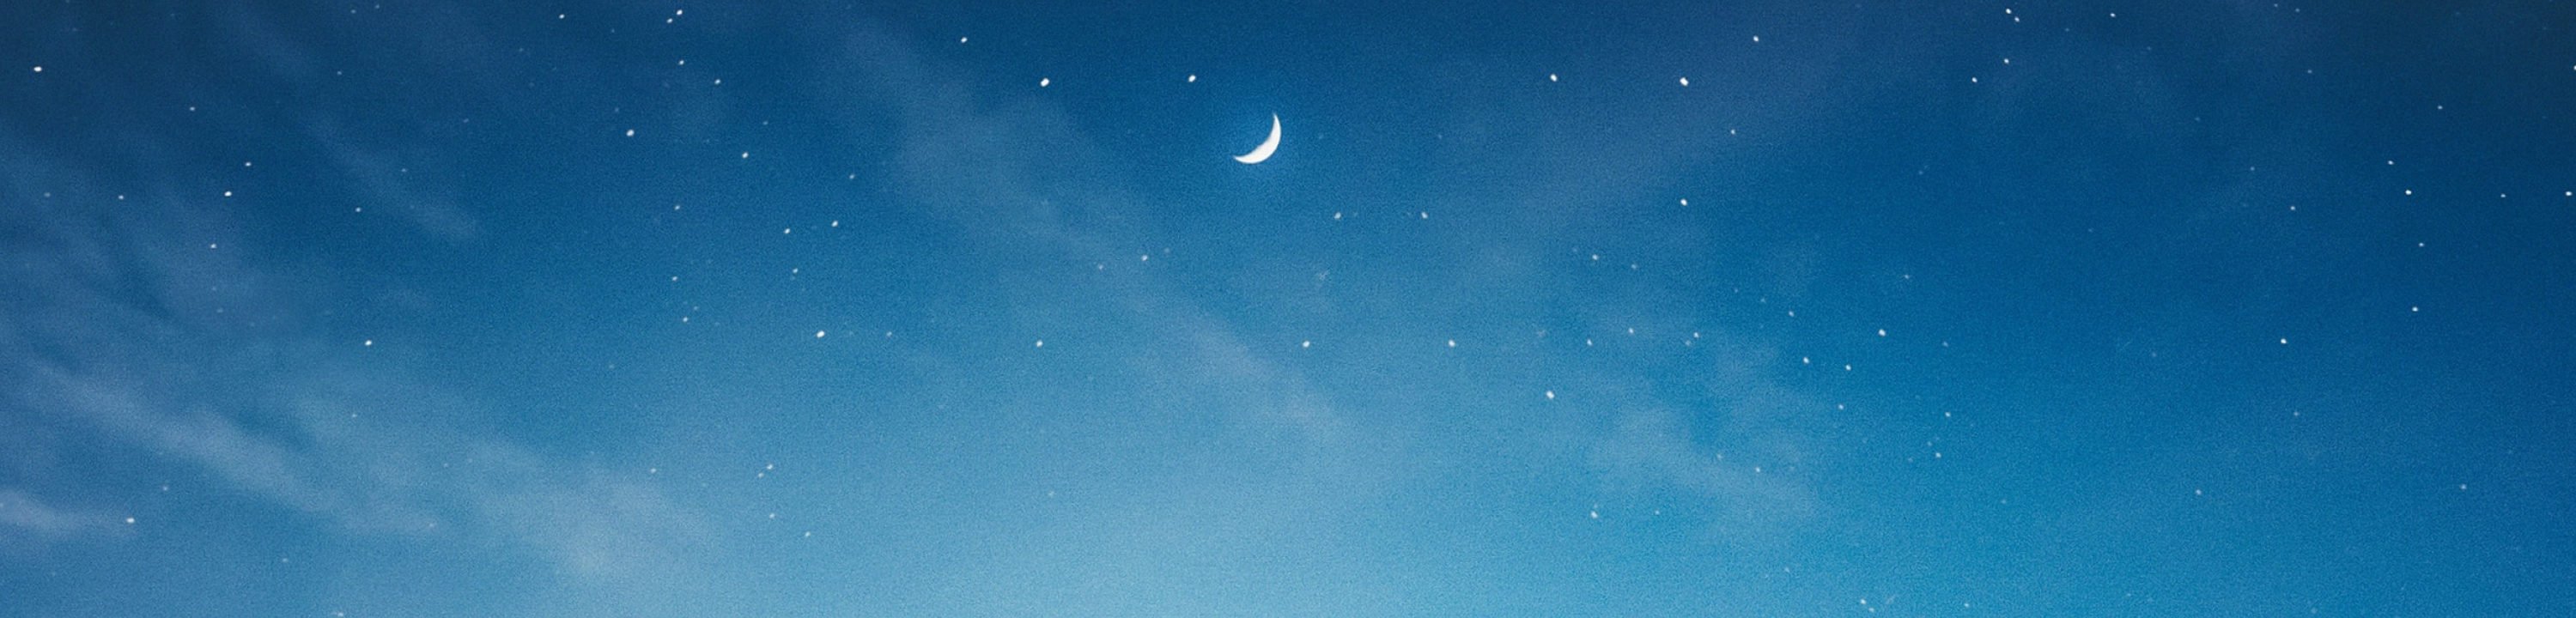 sleep meditation image of blue night sky with crescent moon